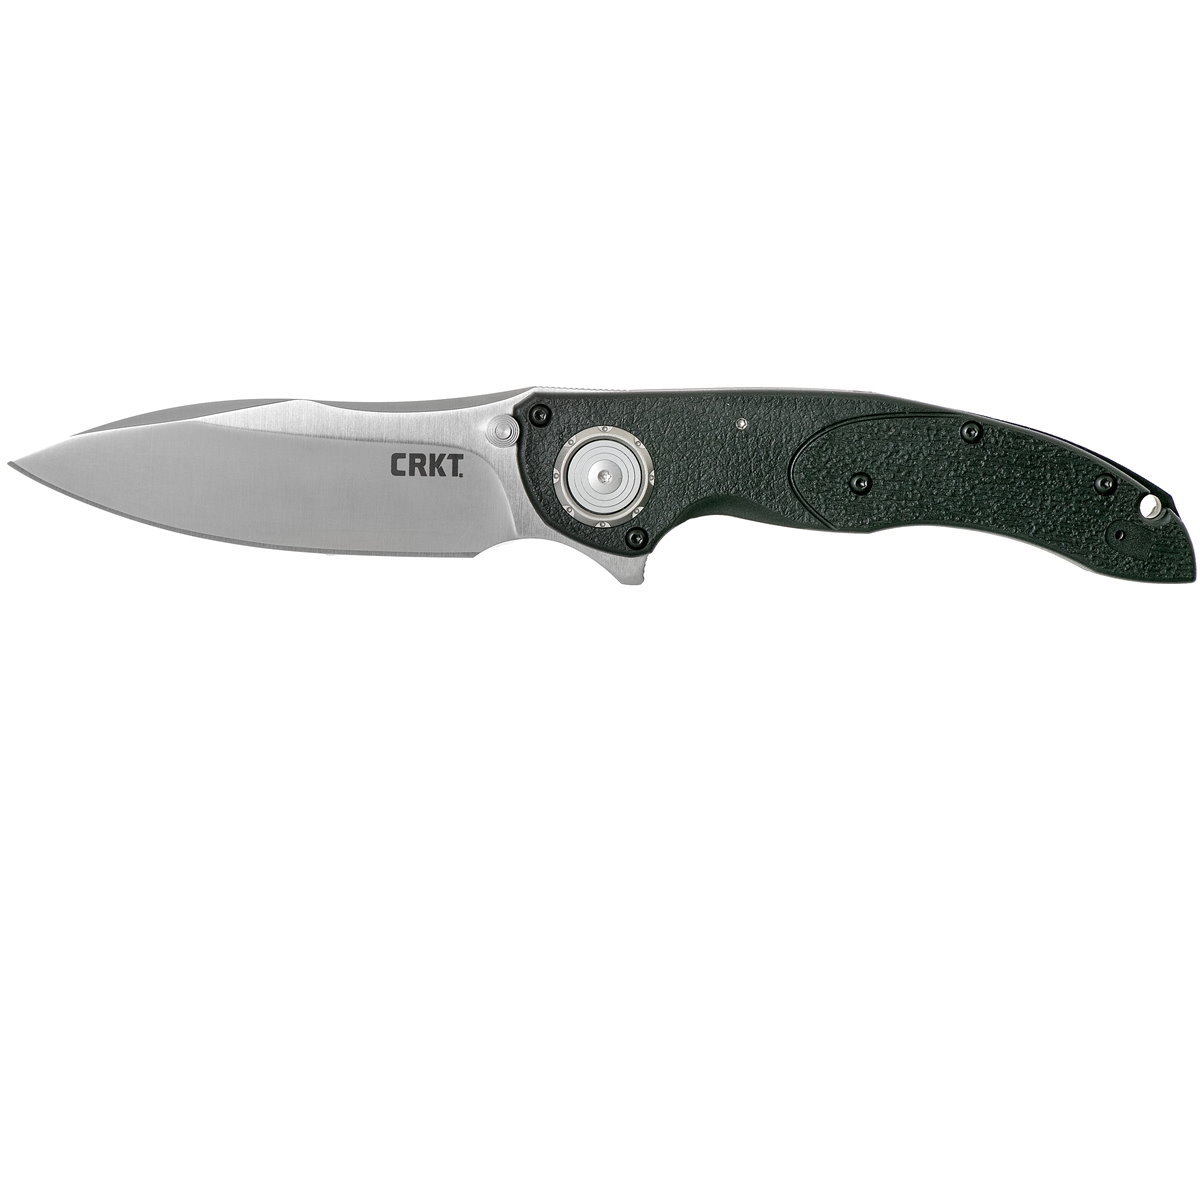 Складной нож CRKT Linchpin, сталь 1.4116 Satin, рукоять термопластик GRN складной нож crkt xan сталь 1 4116 ss рукоять g10